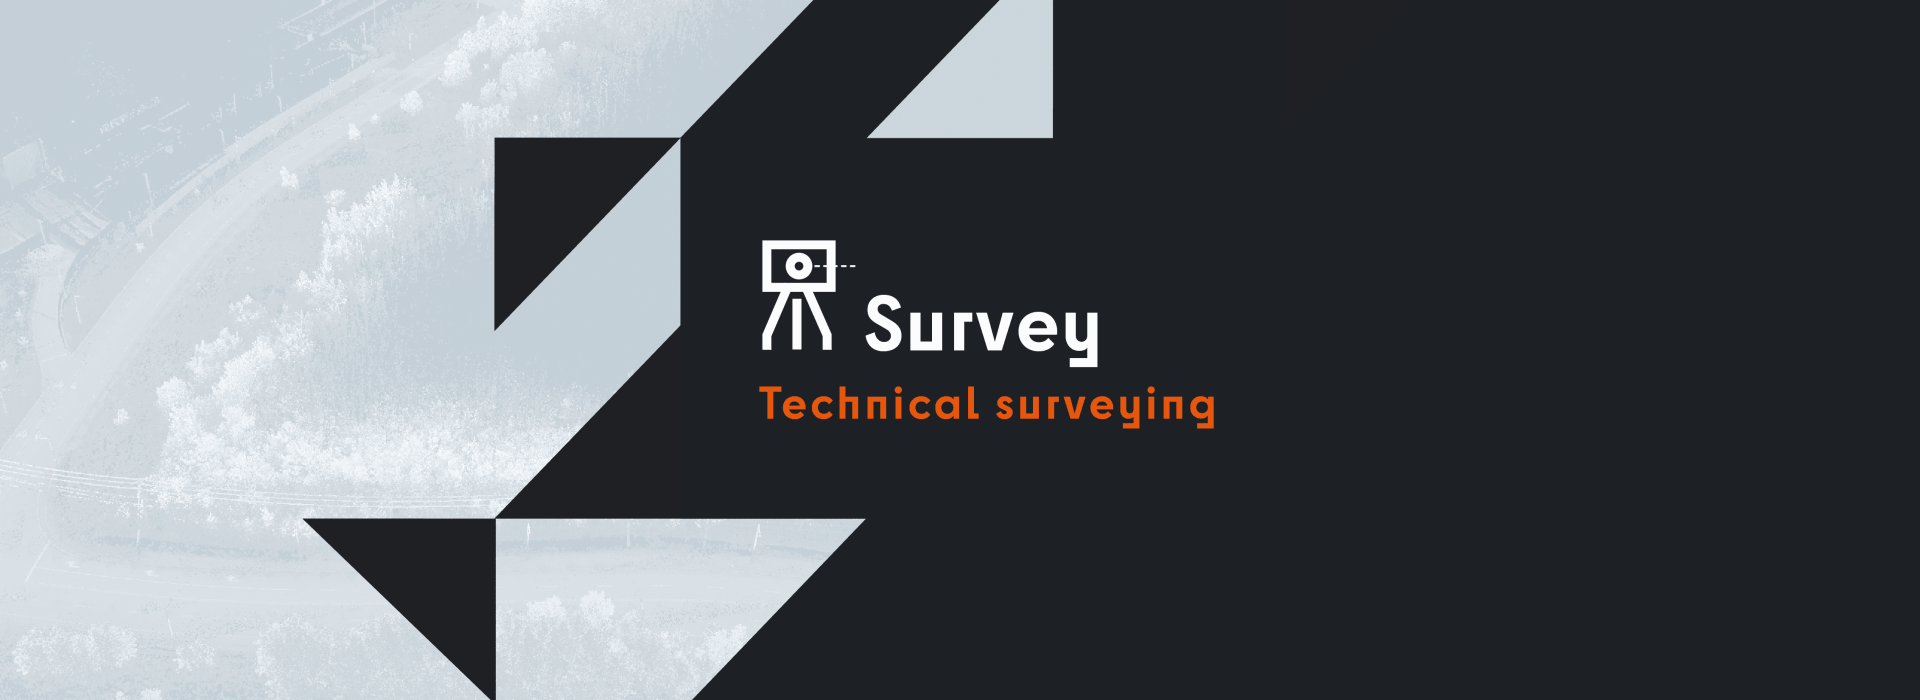 ANGLAIS_WebBanner_Survey - Technical